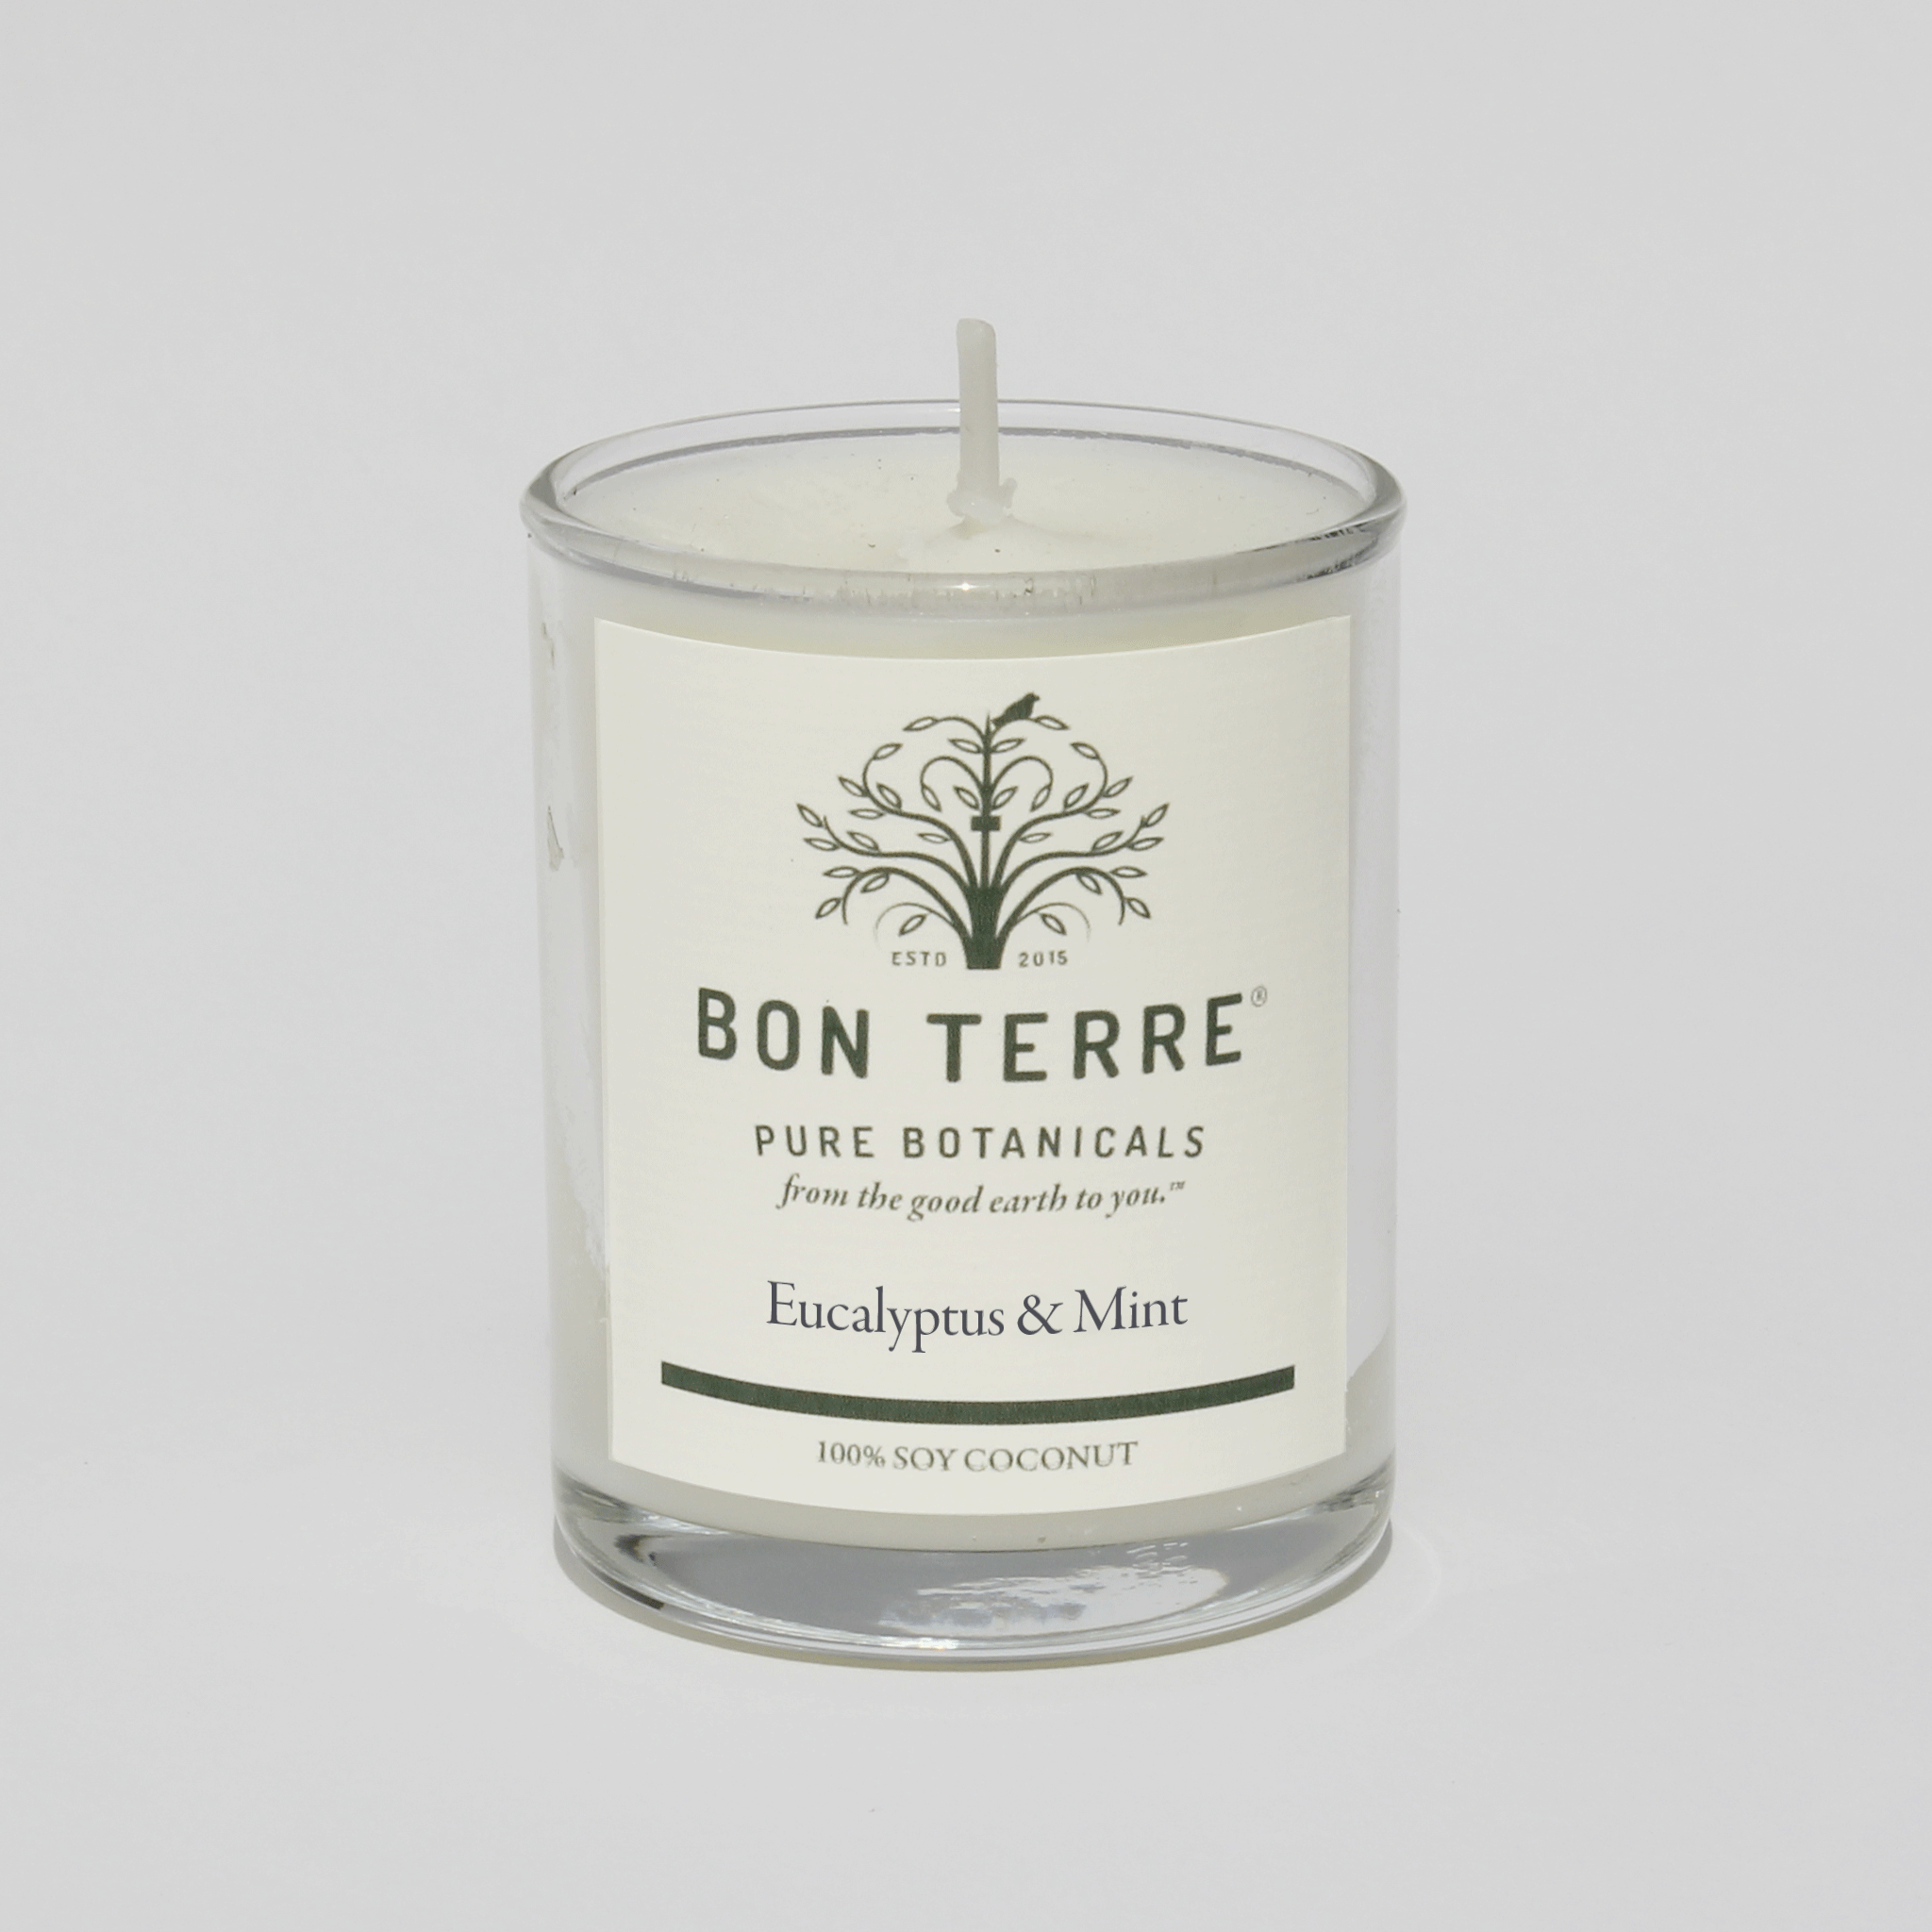 Bon Terre® Eucalyptus & Mint Soy Coconut Candle - 3.5 oz.